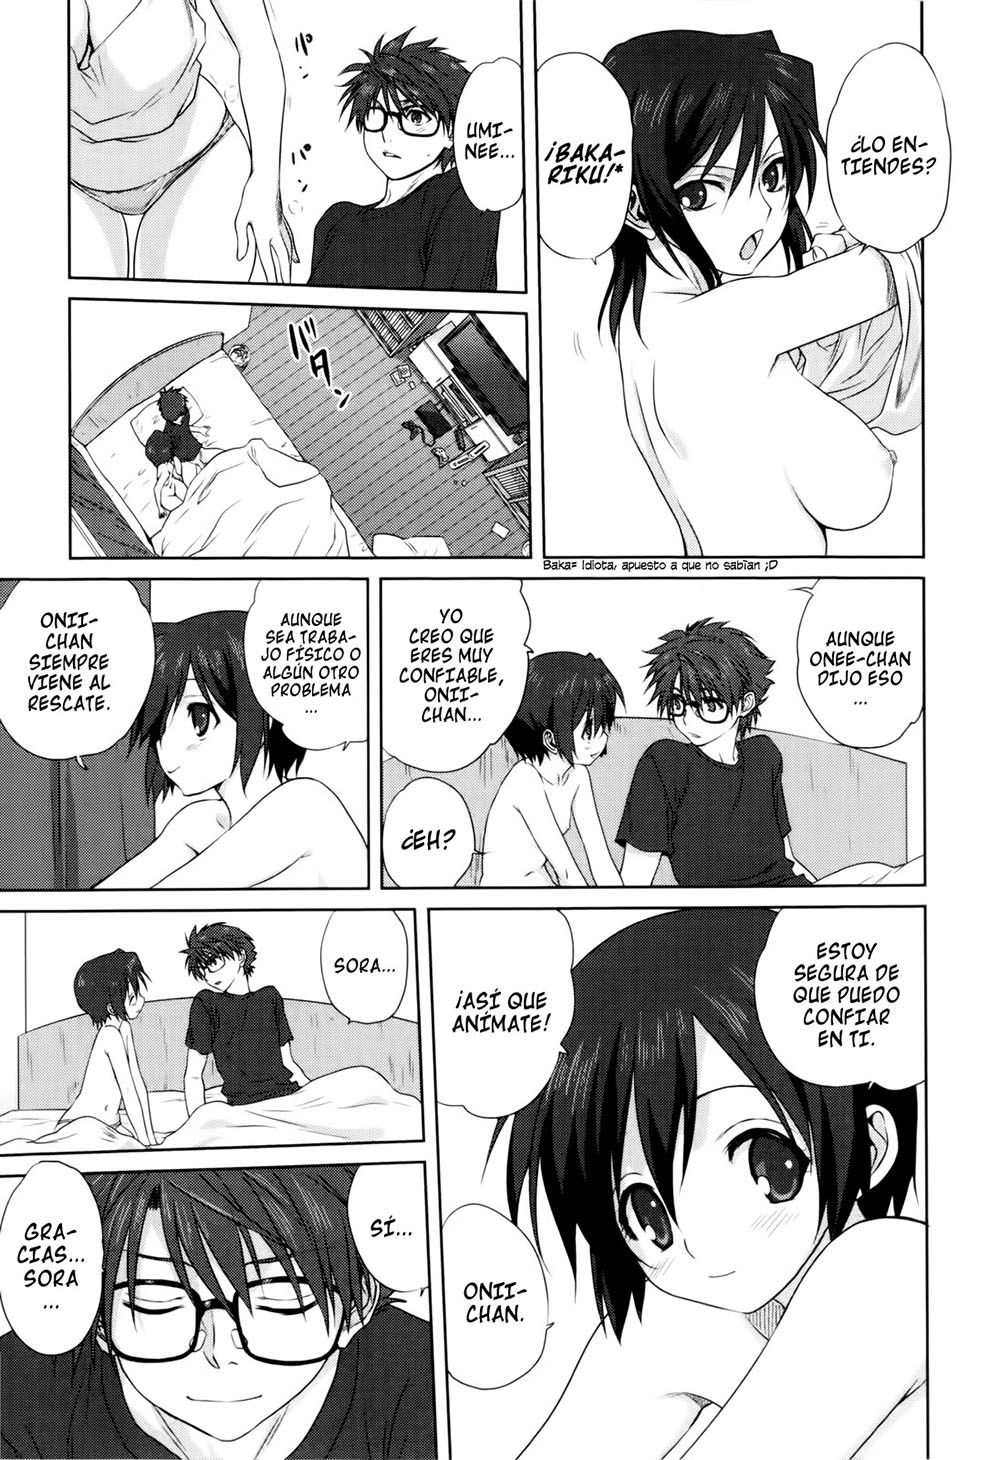 La Familia al Completo #2 - 4 - Comics Porno - Hentai Manga - Cartoon XXX